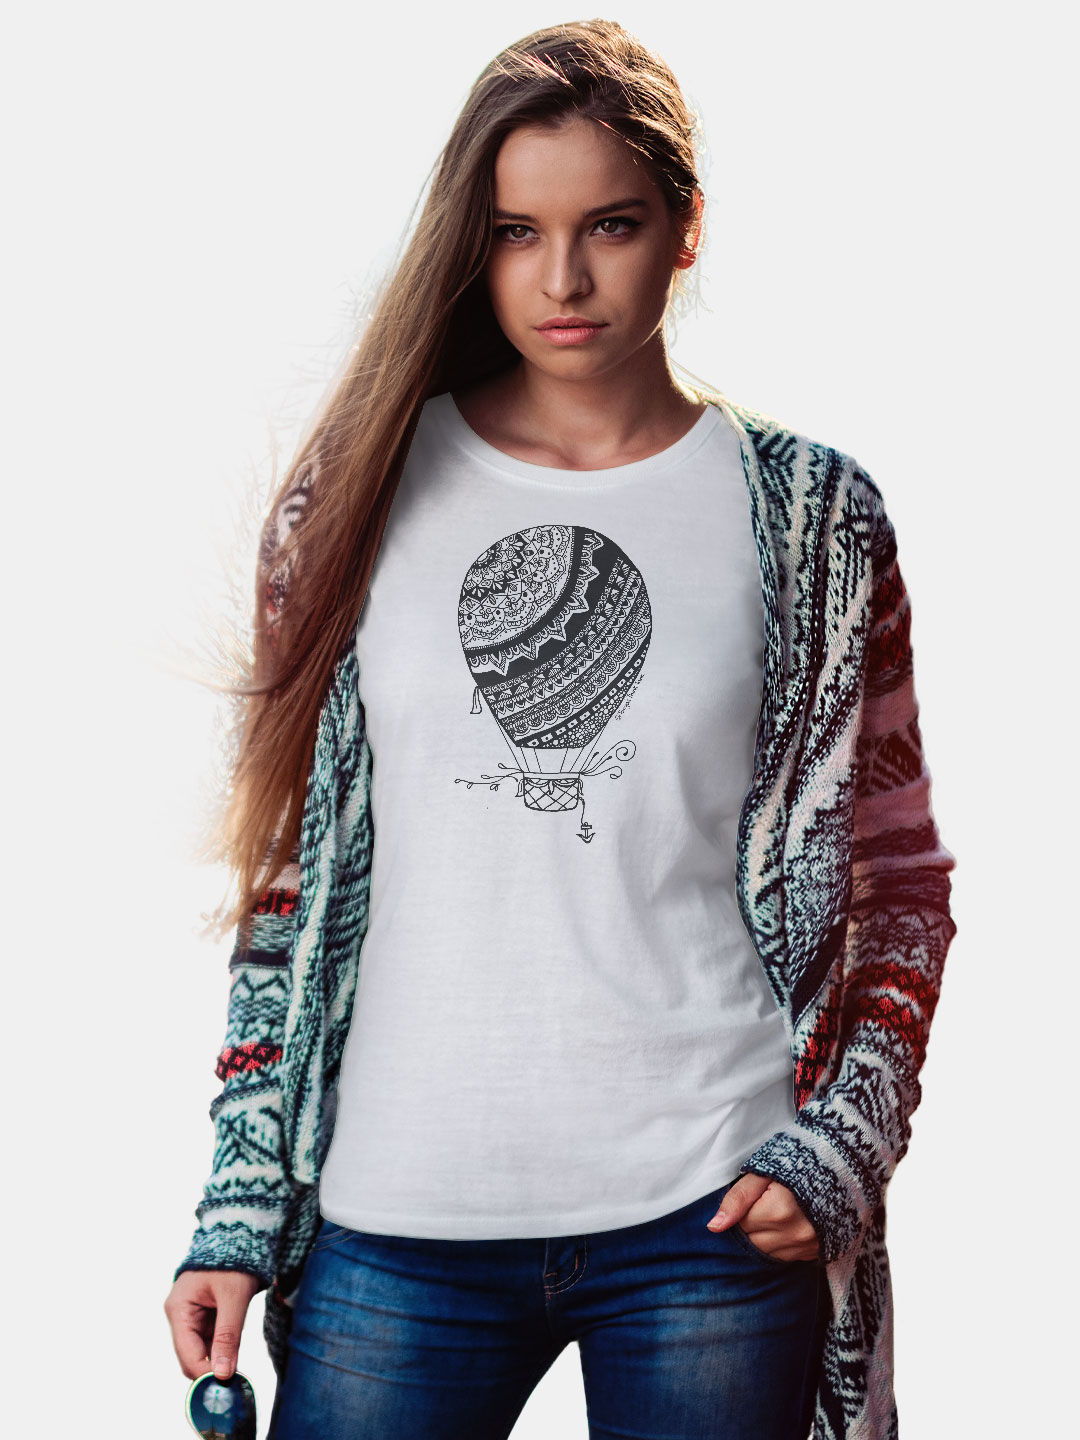 Buy Hot Air Balloon White - Female Designer T-Shirts T-Shirts Online